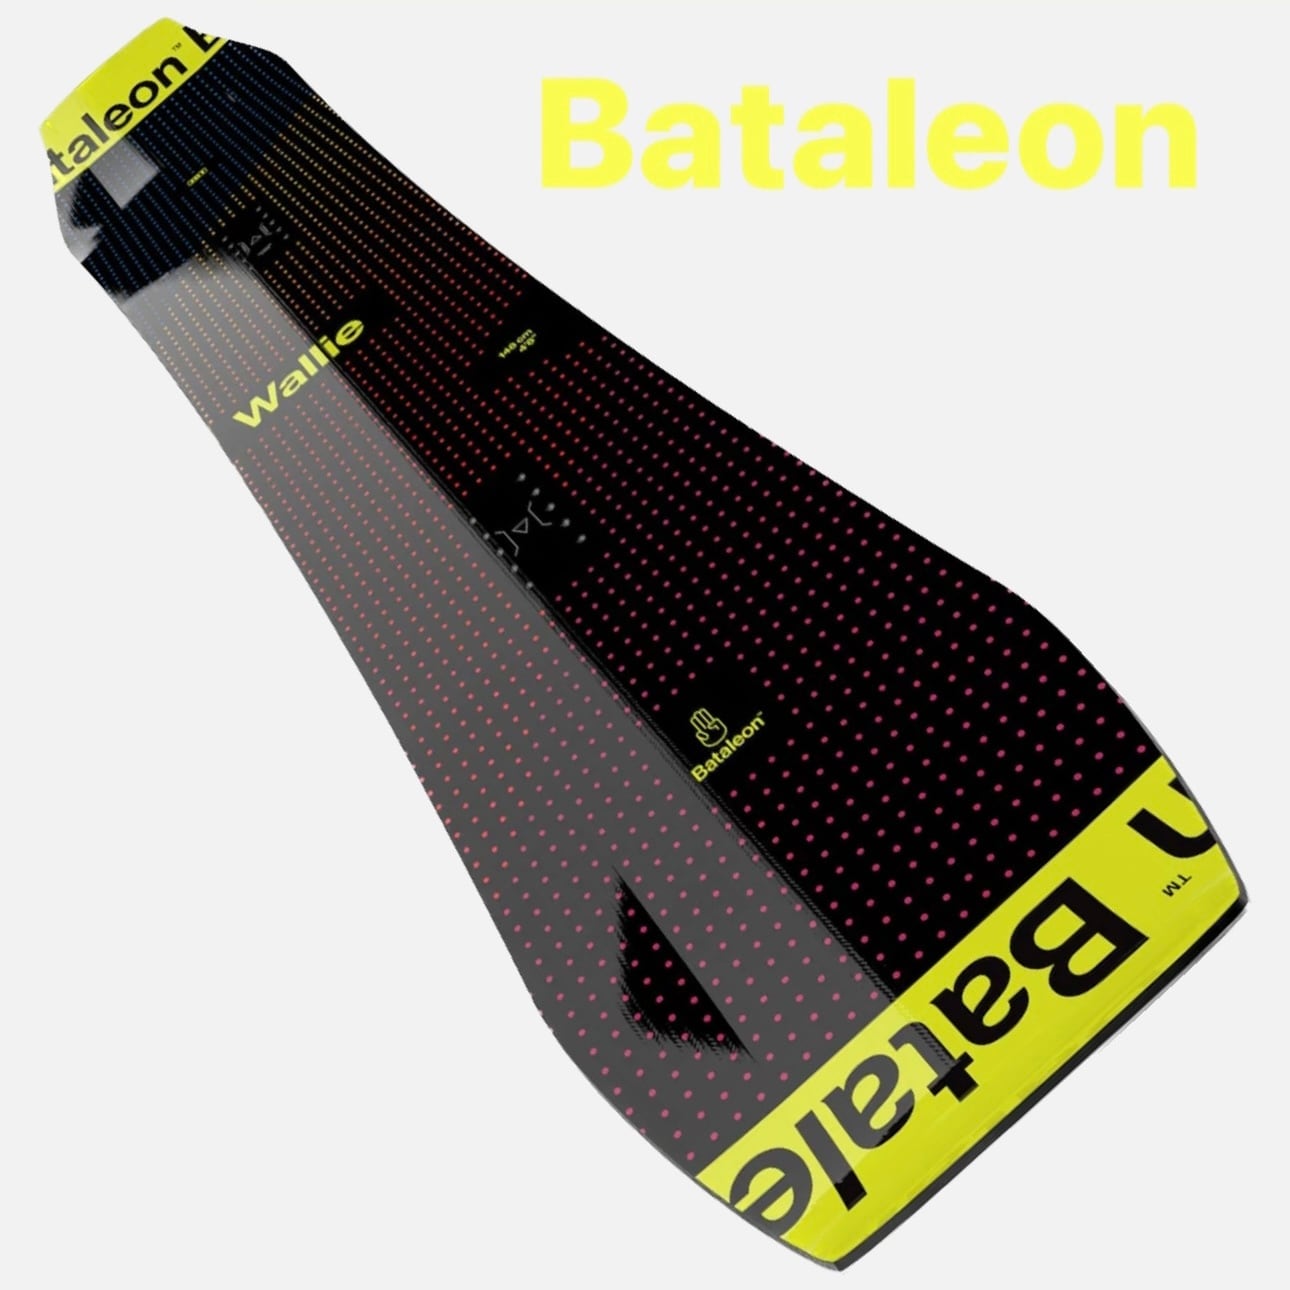 Bataleon Wallie スノーボード板バインディングセット - ボード